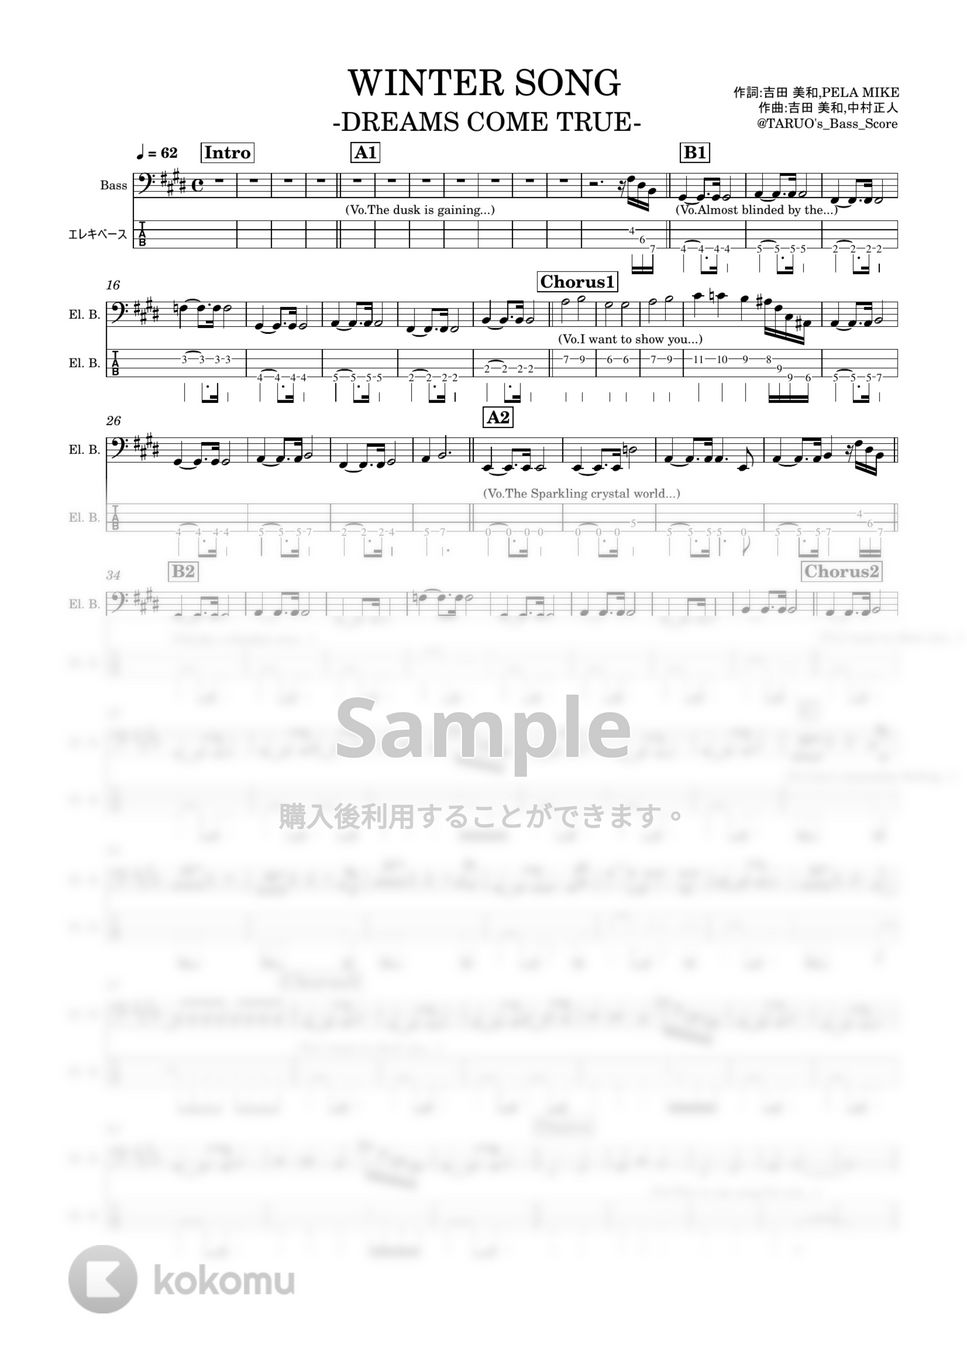 DREAMS COME TRUE - Winter Song (ベース/ドリカム/Winter Song) by TARUO's_Bass_Score